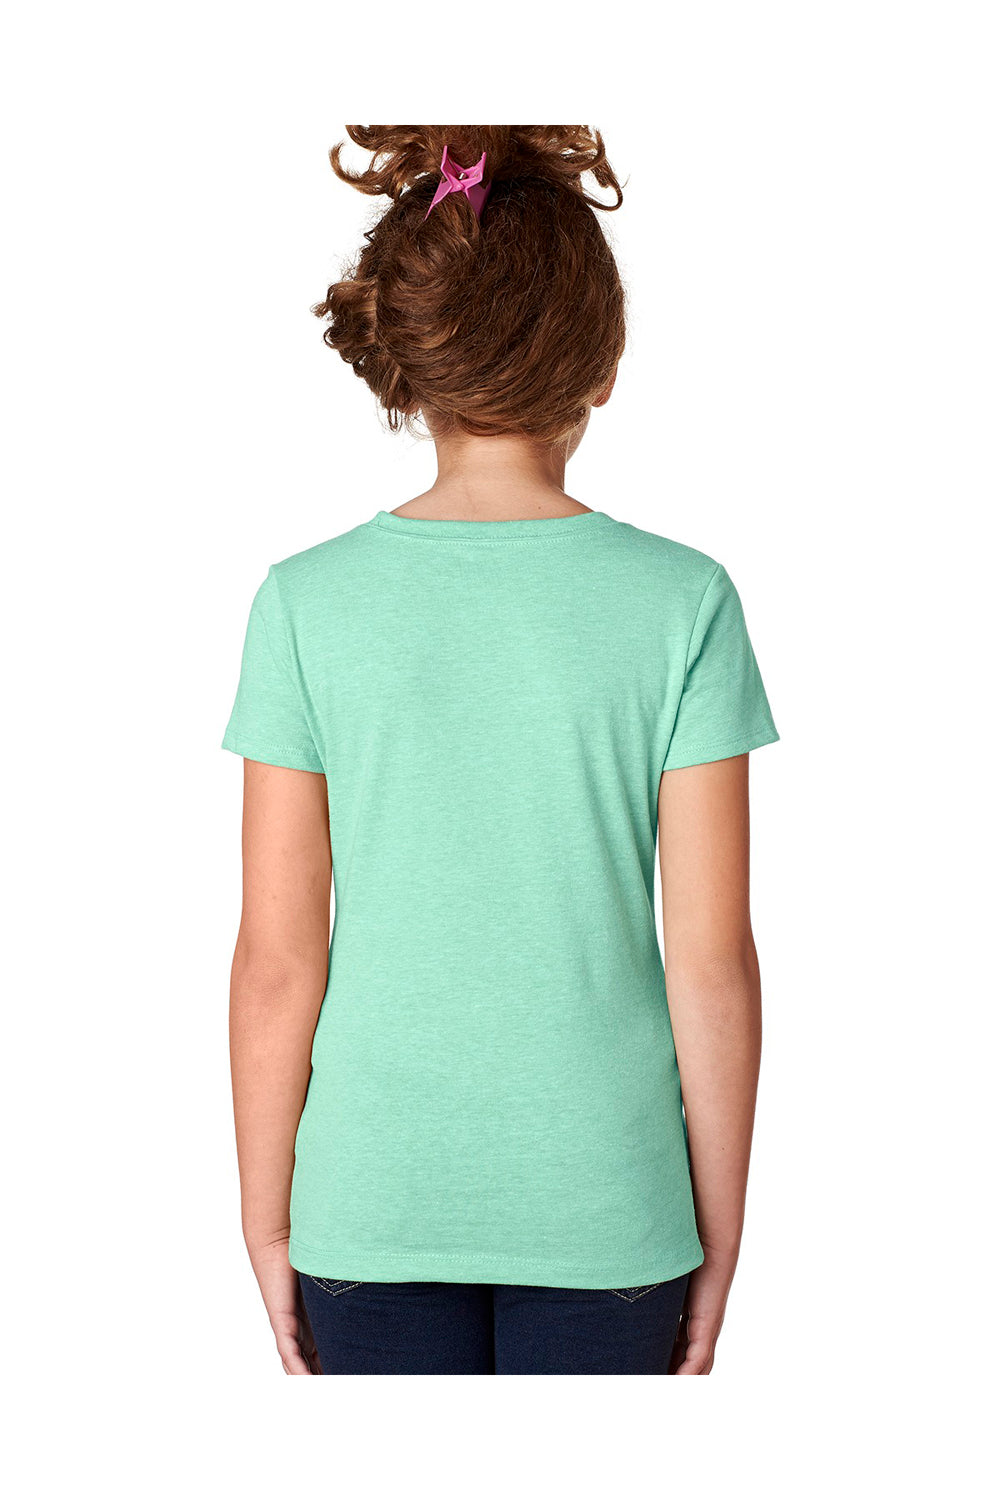 Next Level 3712 Youth Princess CVC Jersey Short Sleeve Crewneck T-Shirt Mint Green Back